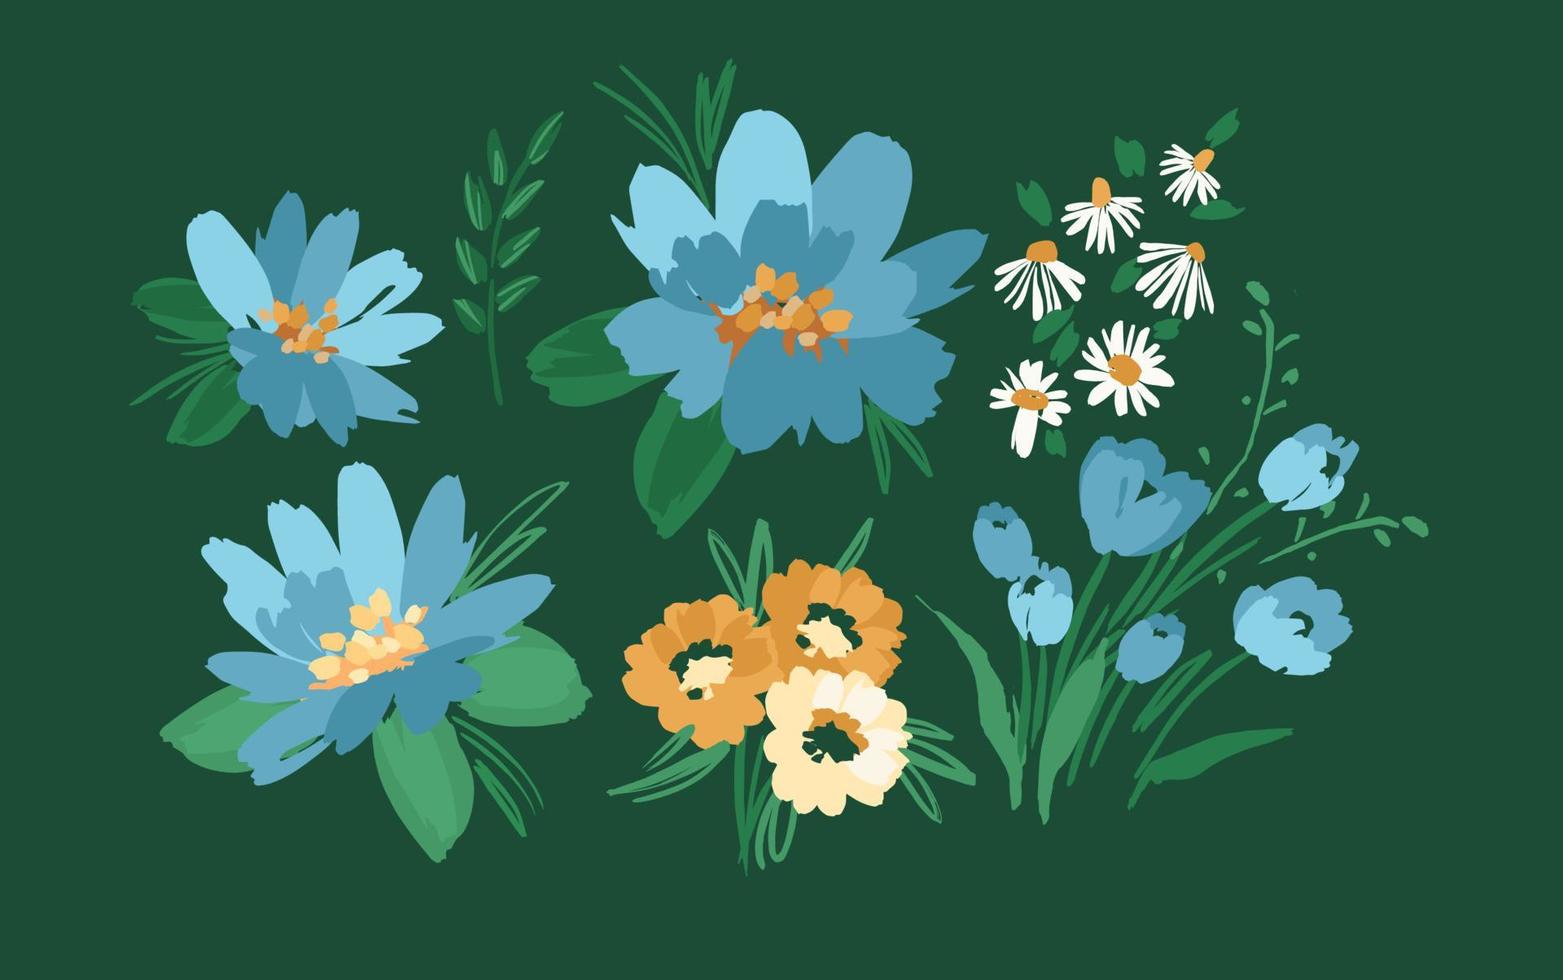 Set of floral design elements. Leaves, flowers, grass, branches Vector illustration